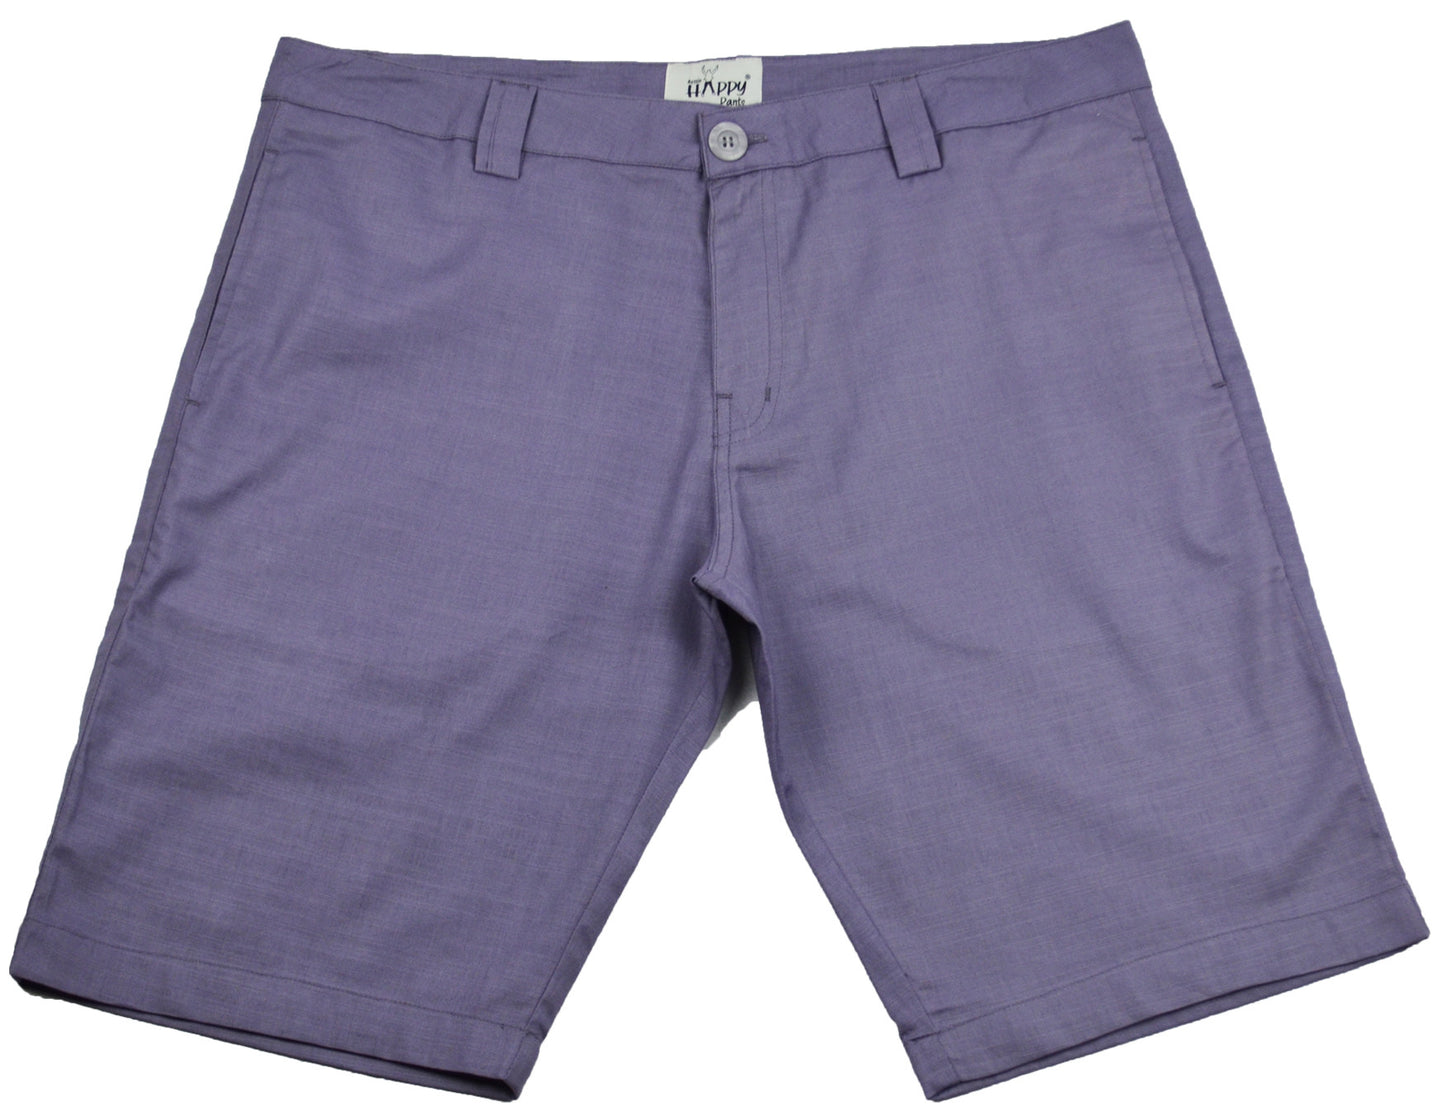 Purple/Gray Cotton Shorts - Happy Pants - 1